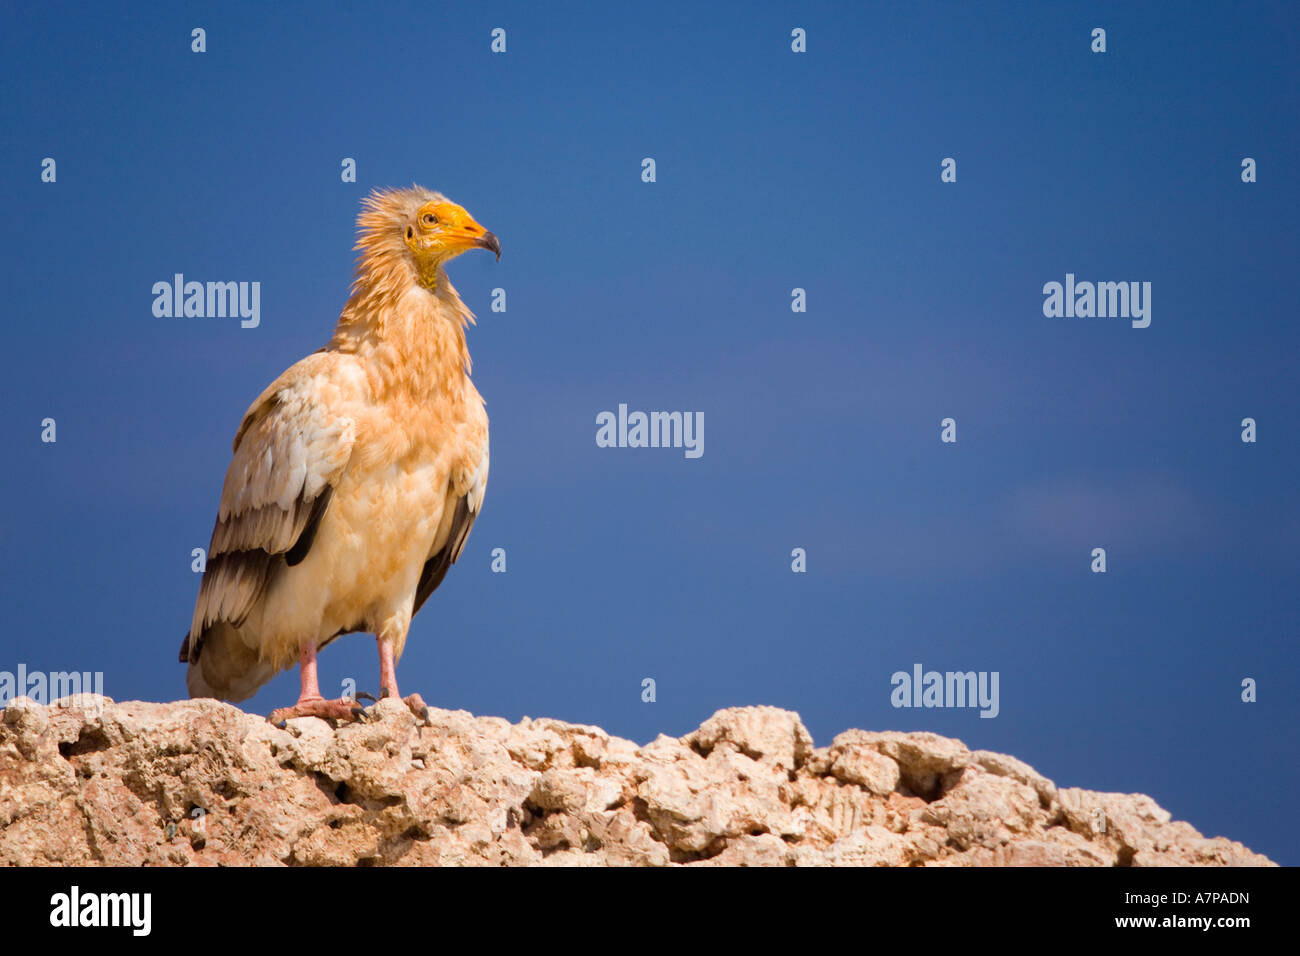 socotran-eagle-socotra-island-yemen-A7PADN.jpg